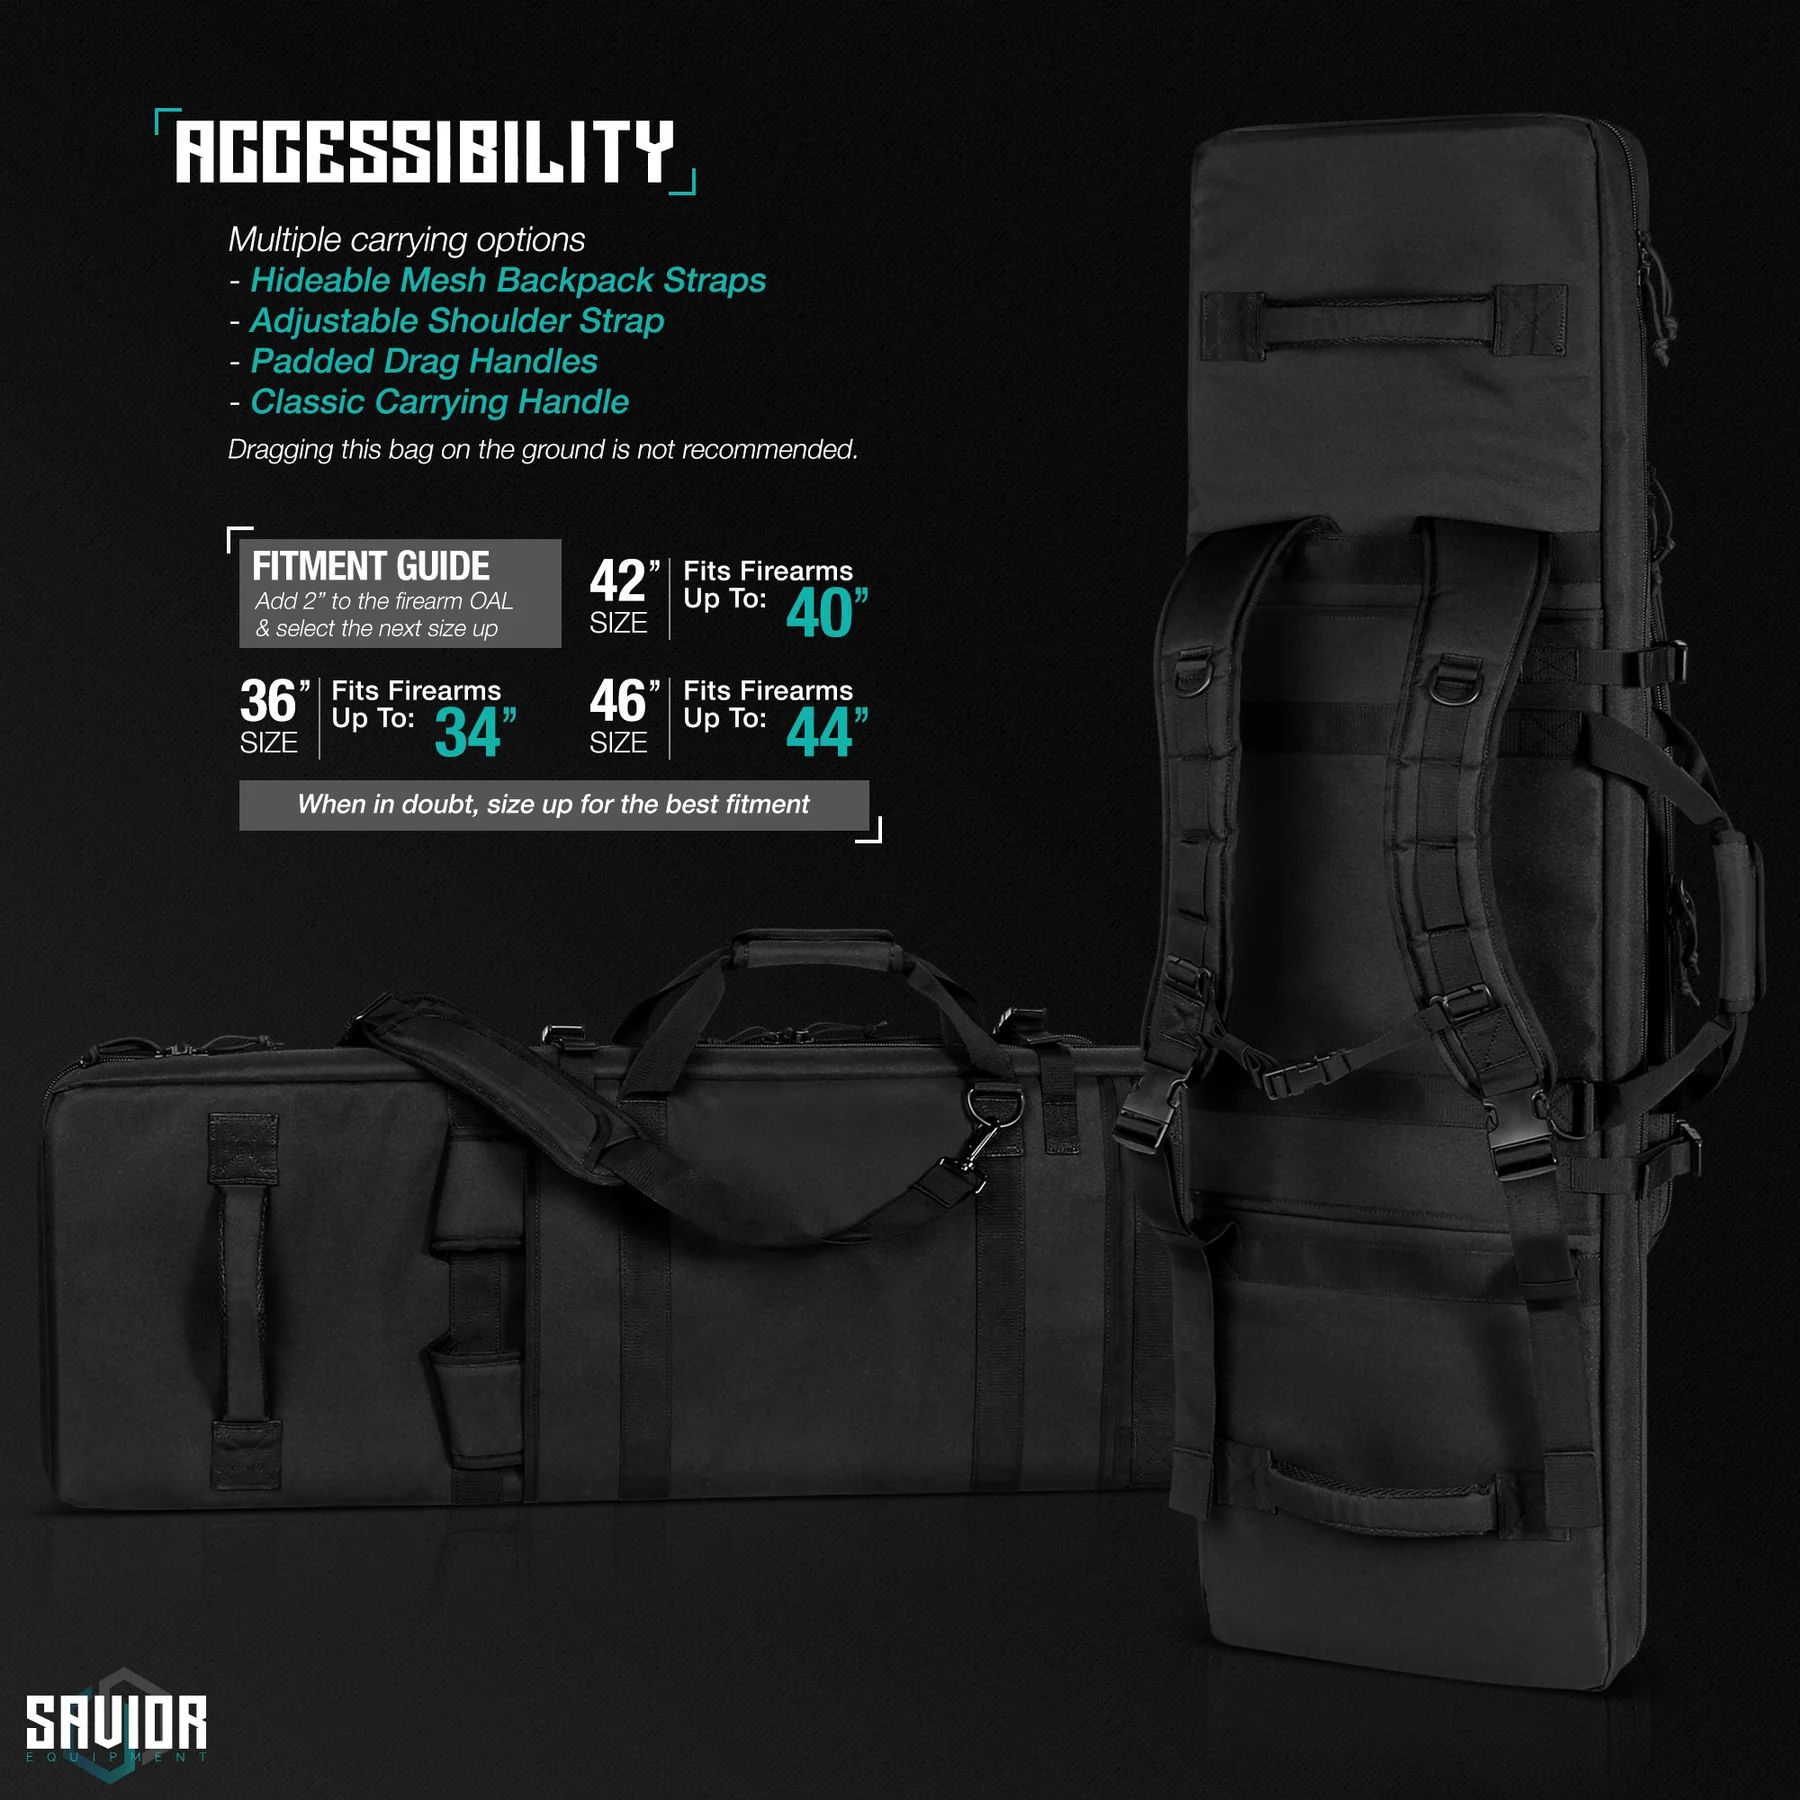 Savior_Equipment_Specialist_Rifle Bag_Black_RB-4213DG-WS-BK